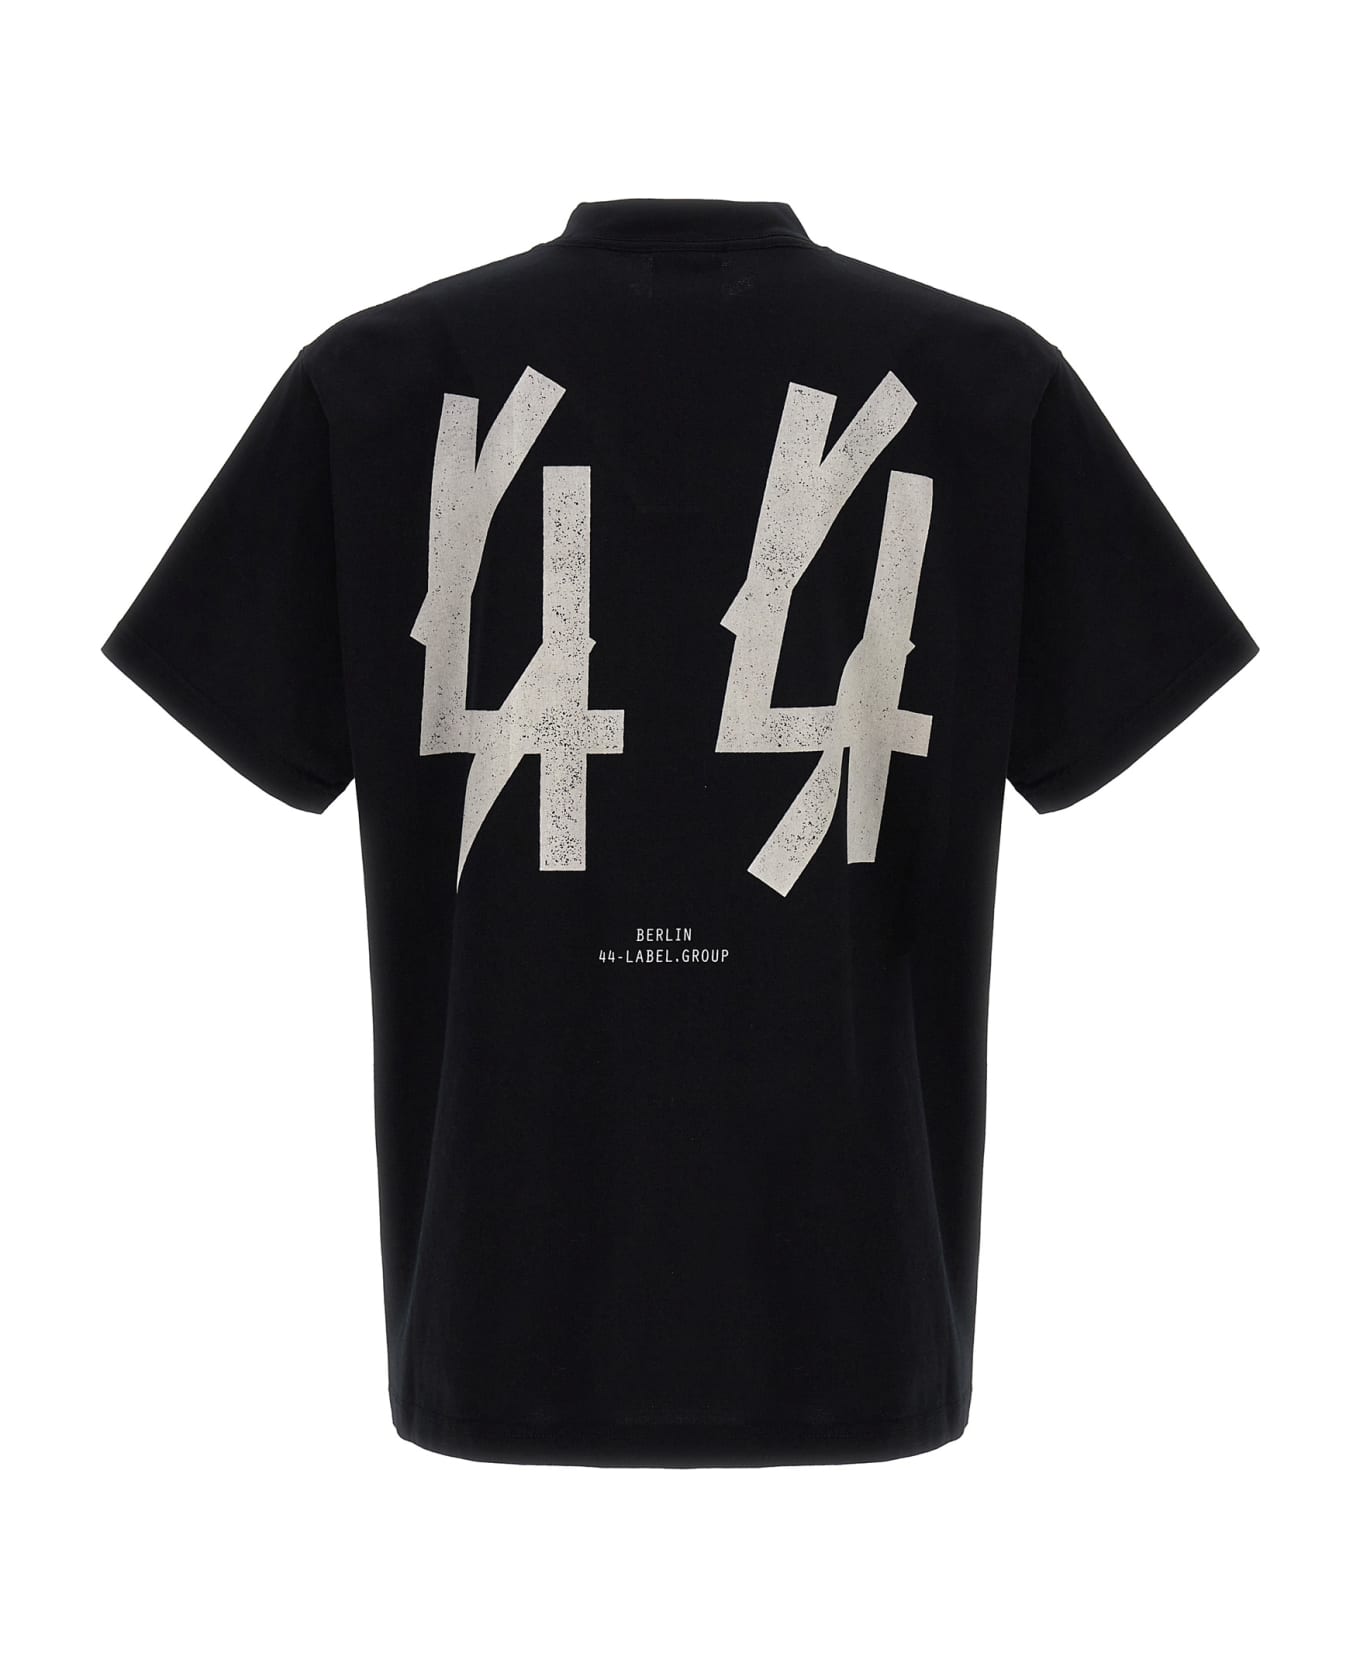 44 Label Group T-shirt Guestlist/berlin Sub' - BLACK シャツ